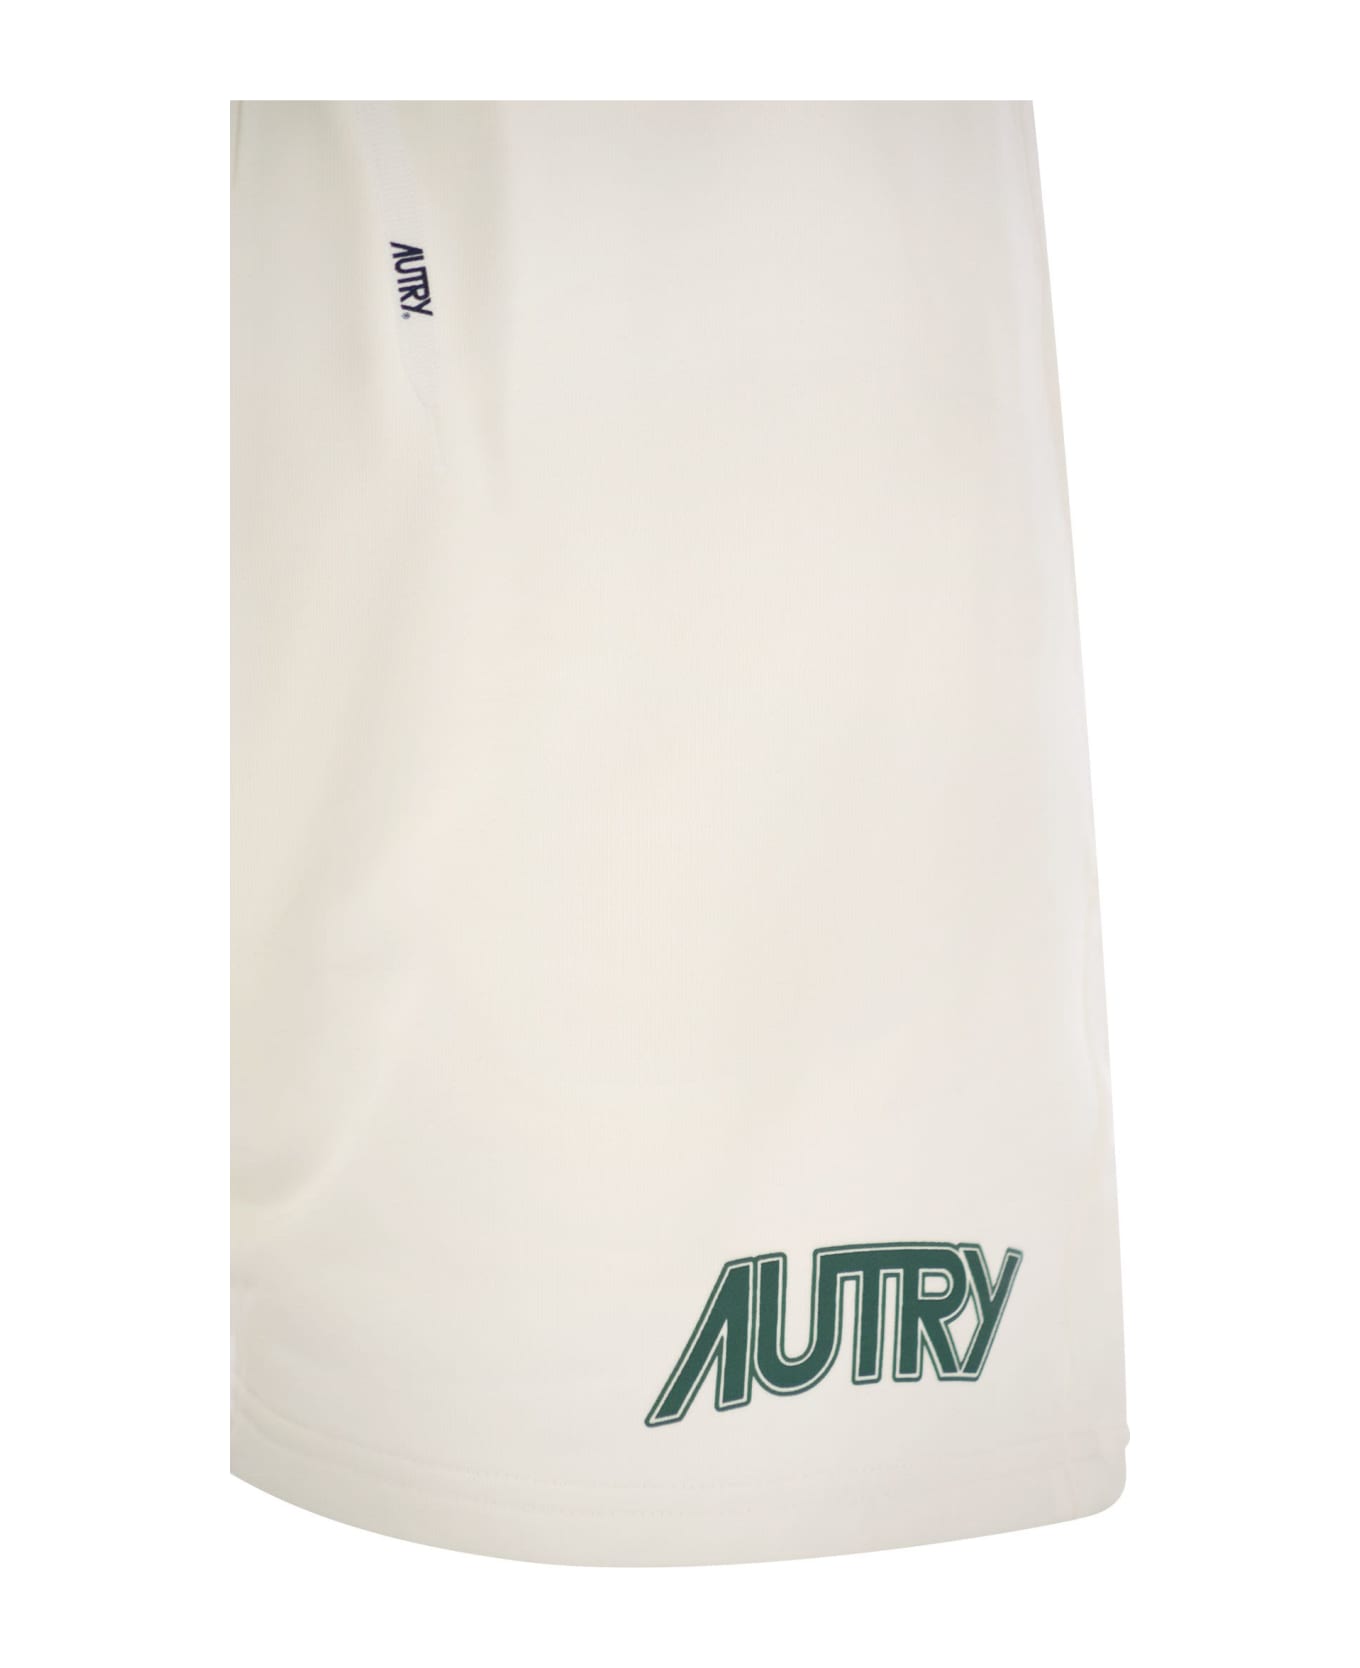 Autry Bermuda Shorts With Logo - White name:468